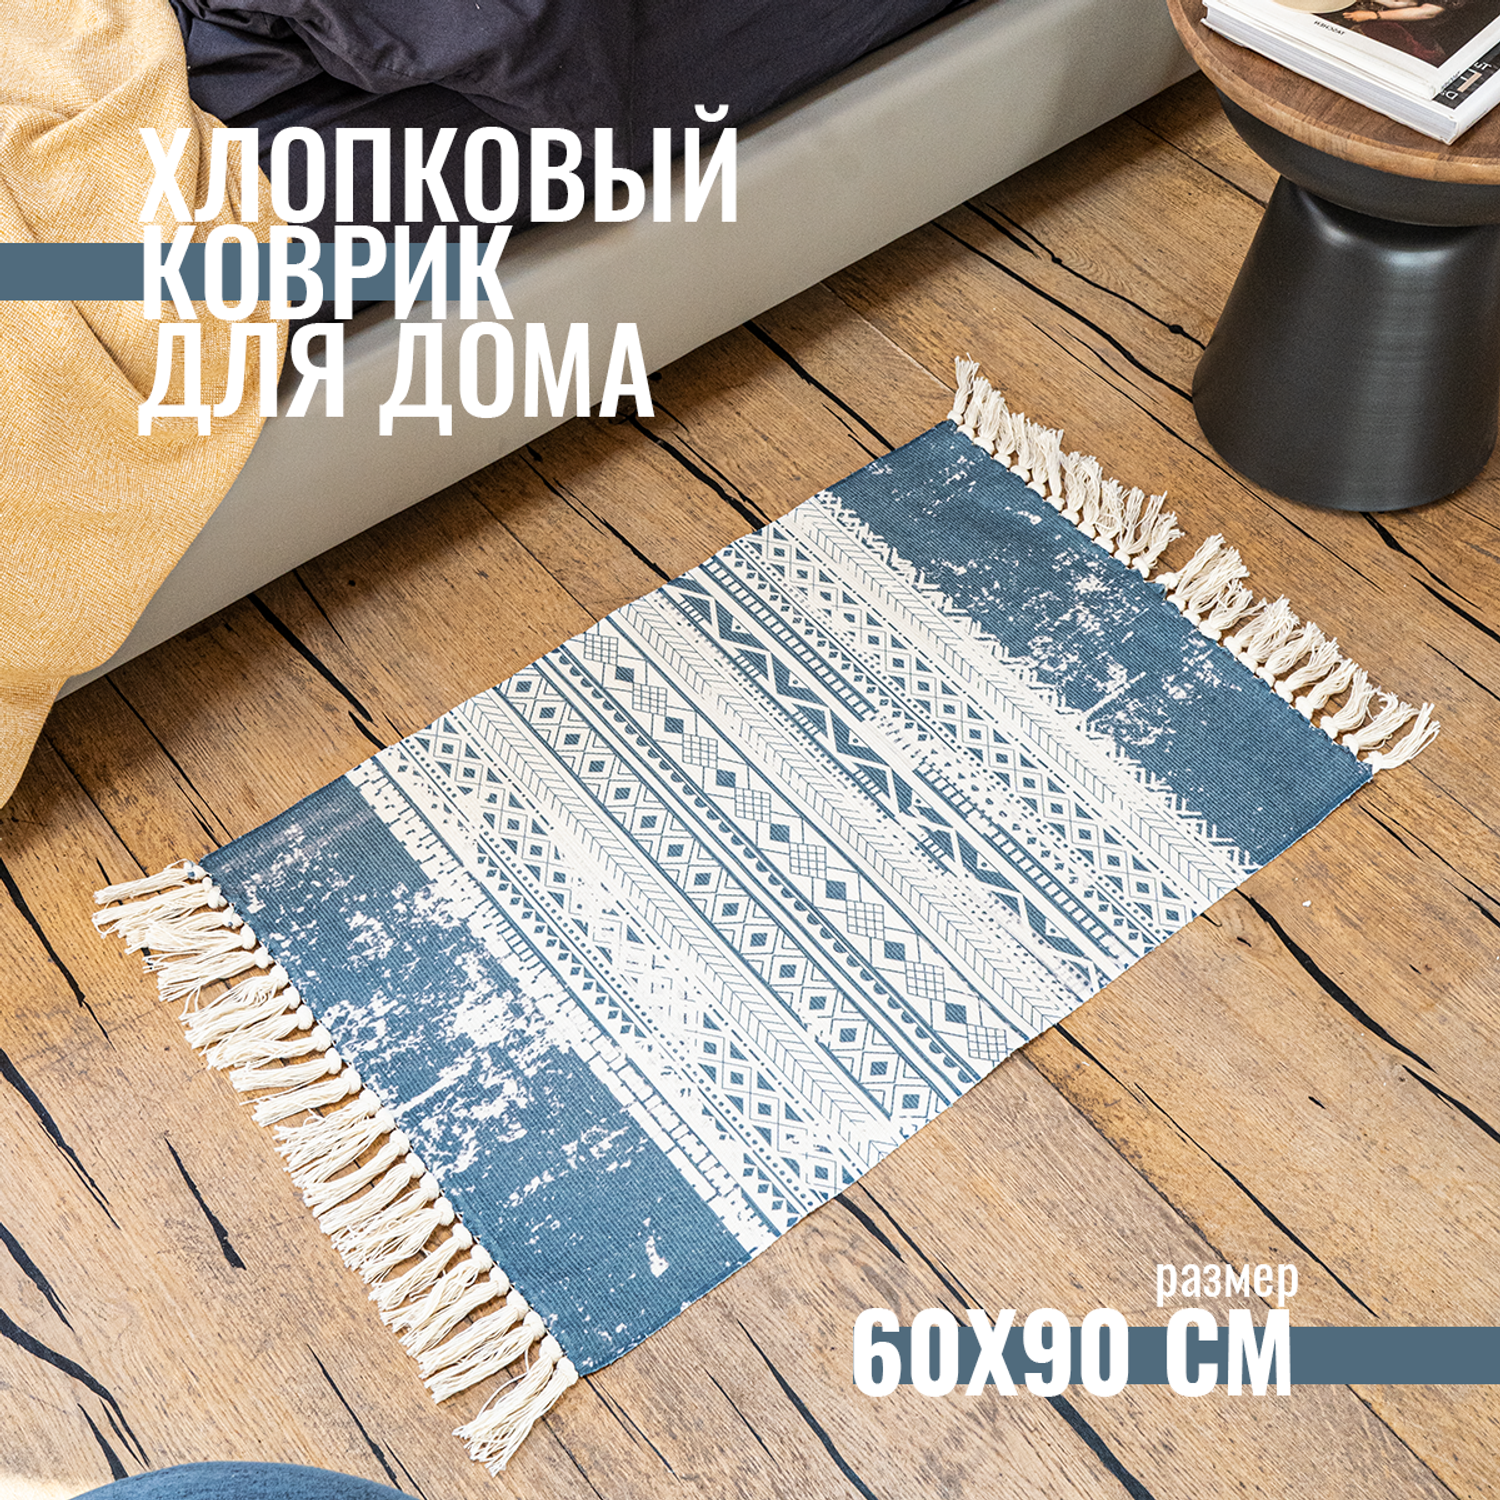 Хлопковый коврик Homfox для дома 60x90 см - фото 1